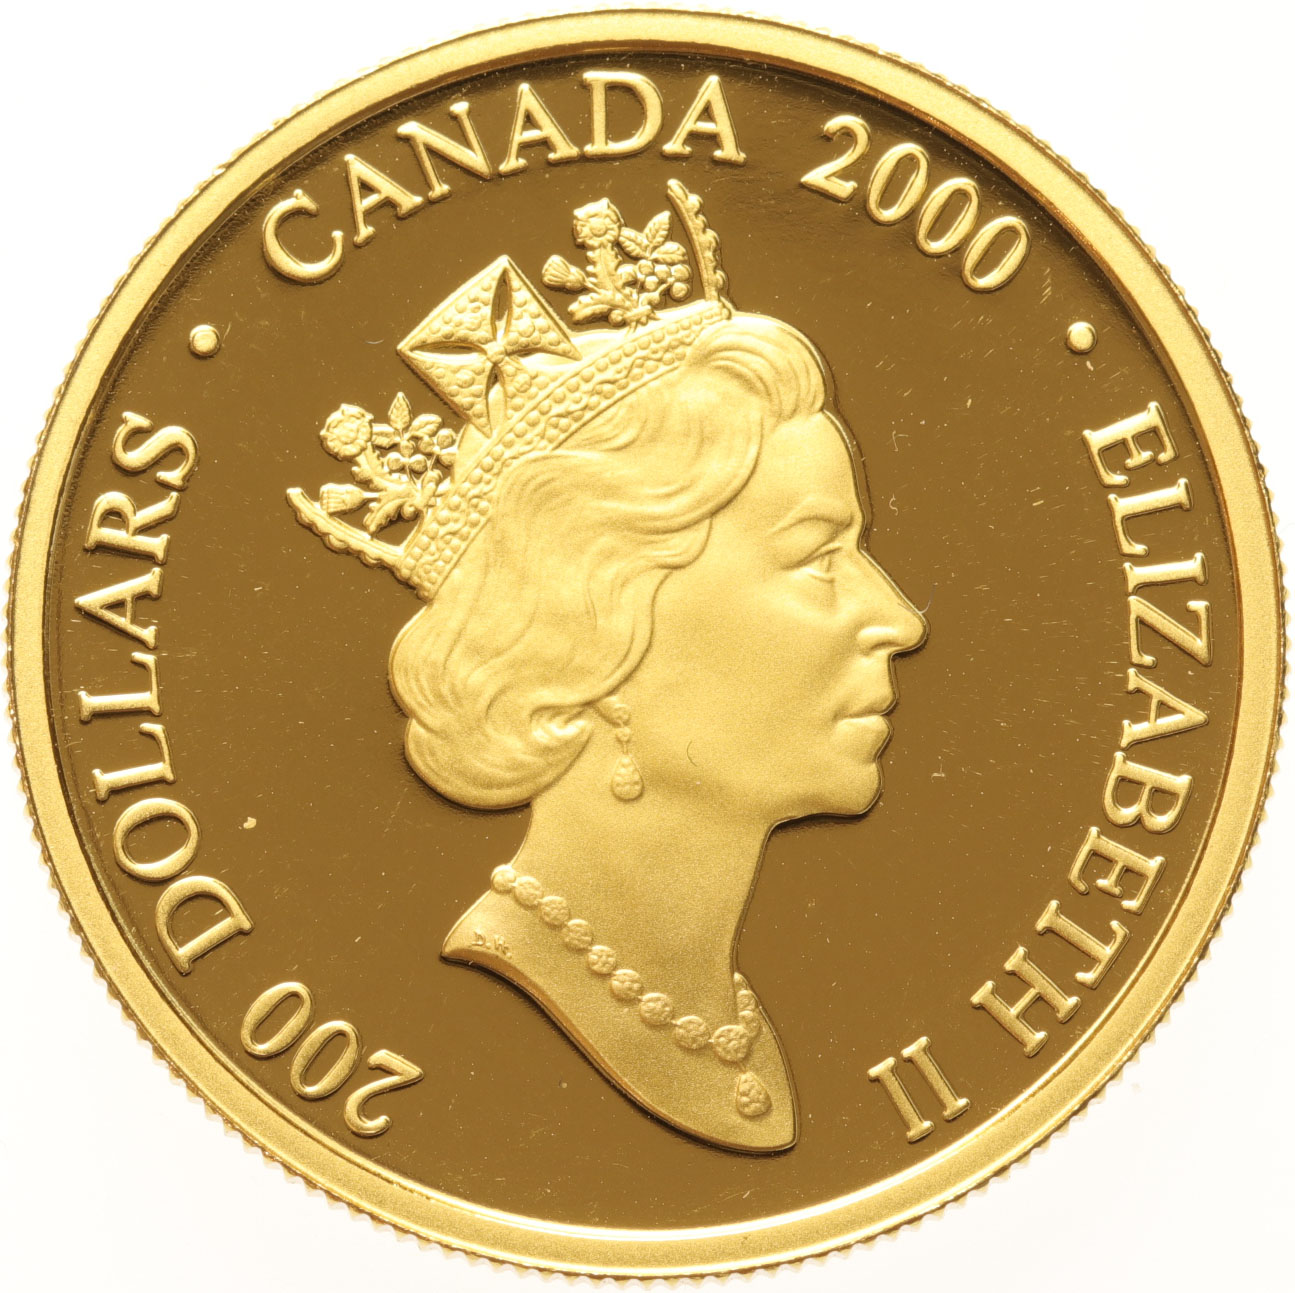 Canada 200 dollars 2000